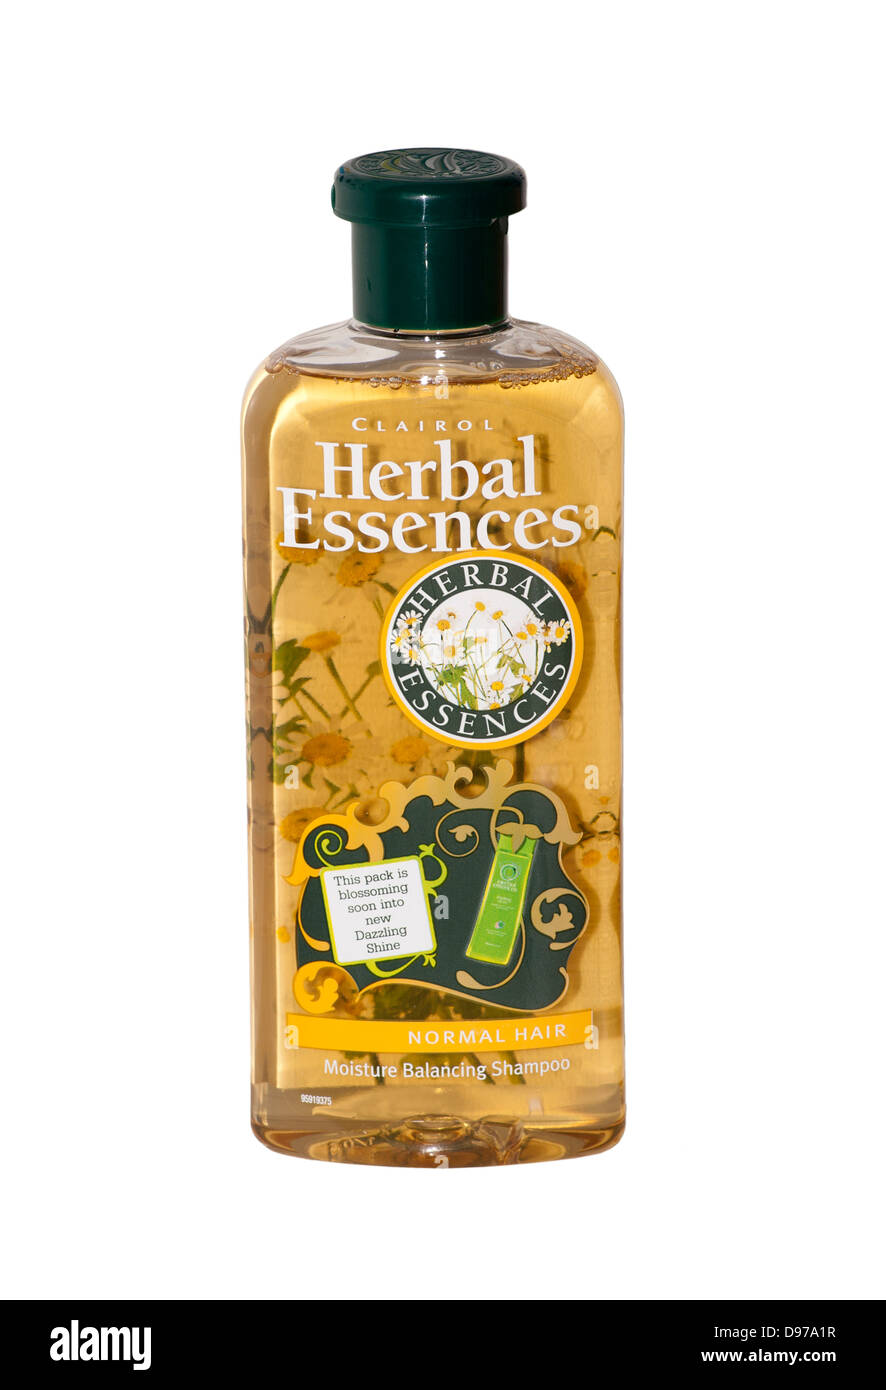 Bottle Of Clairol Herbal Essences Hair Shampoo Stock Photo - Alamy